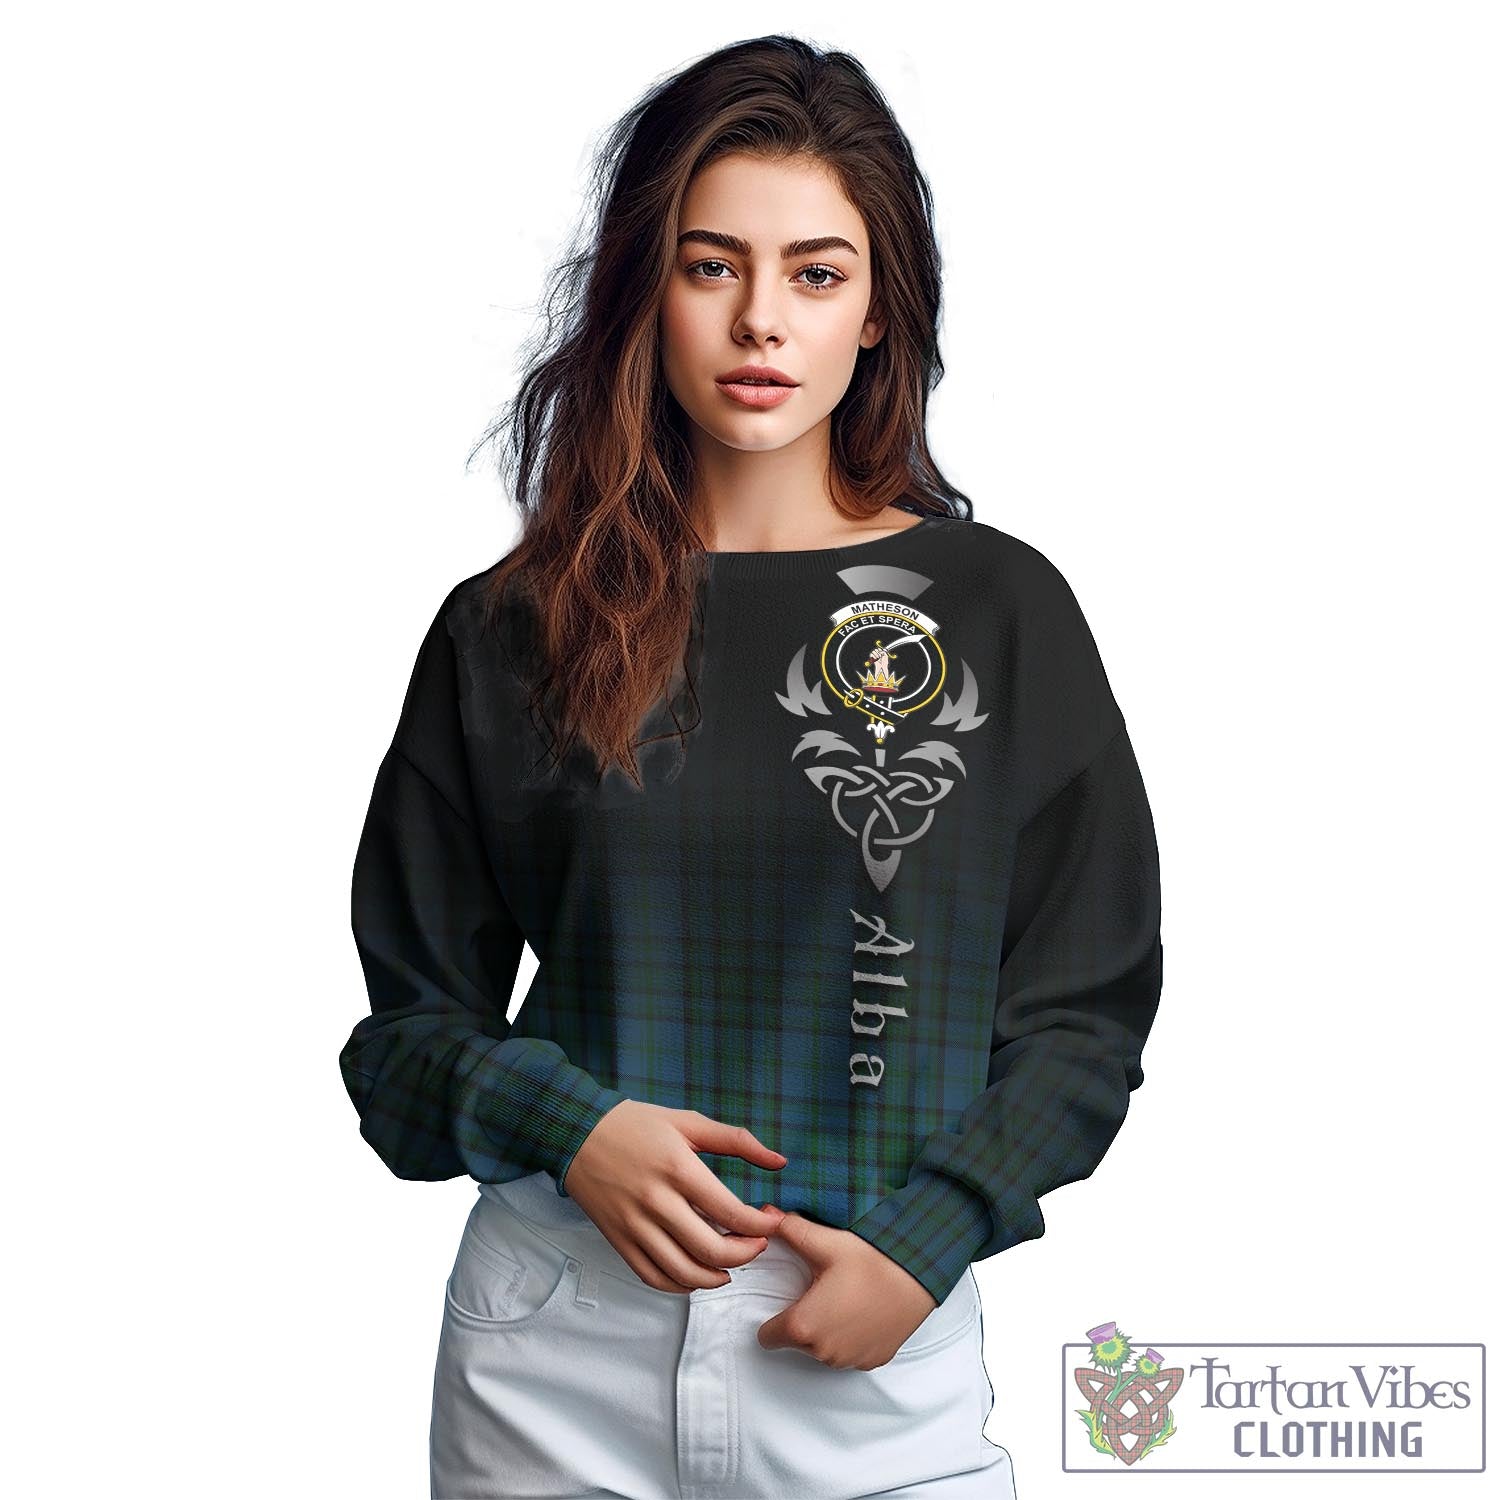 Tartan Vibes Clothing Matheson Hunting Tartan Sweatshirt Featuring Alba Gu Brath Family Crest Celtic Inspired